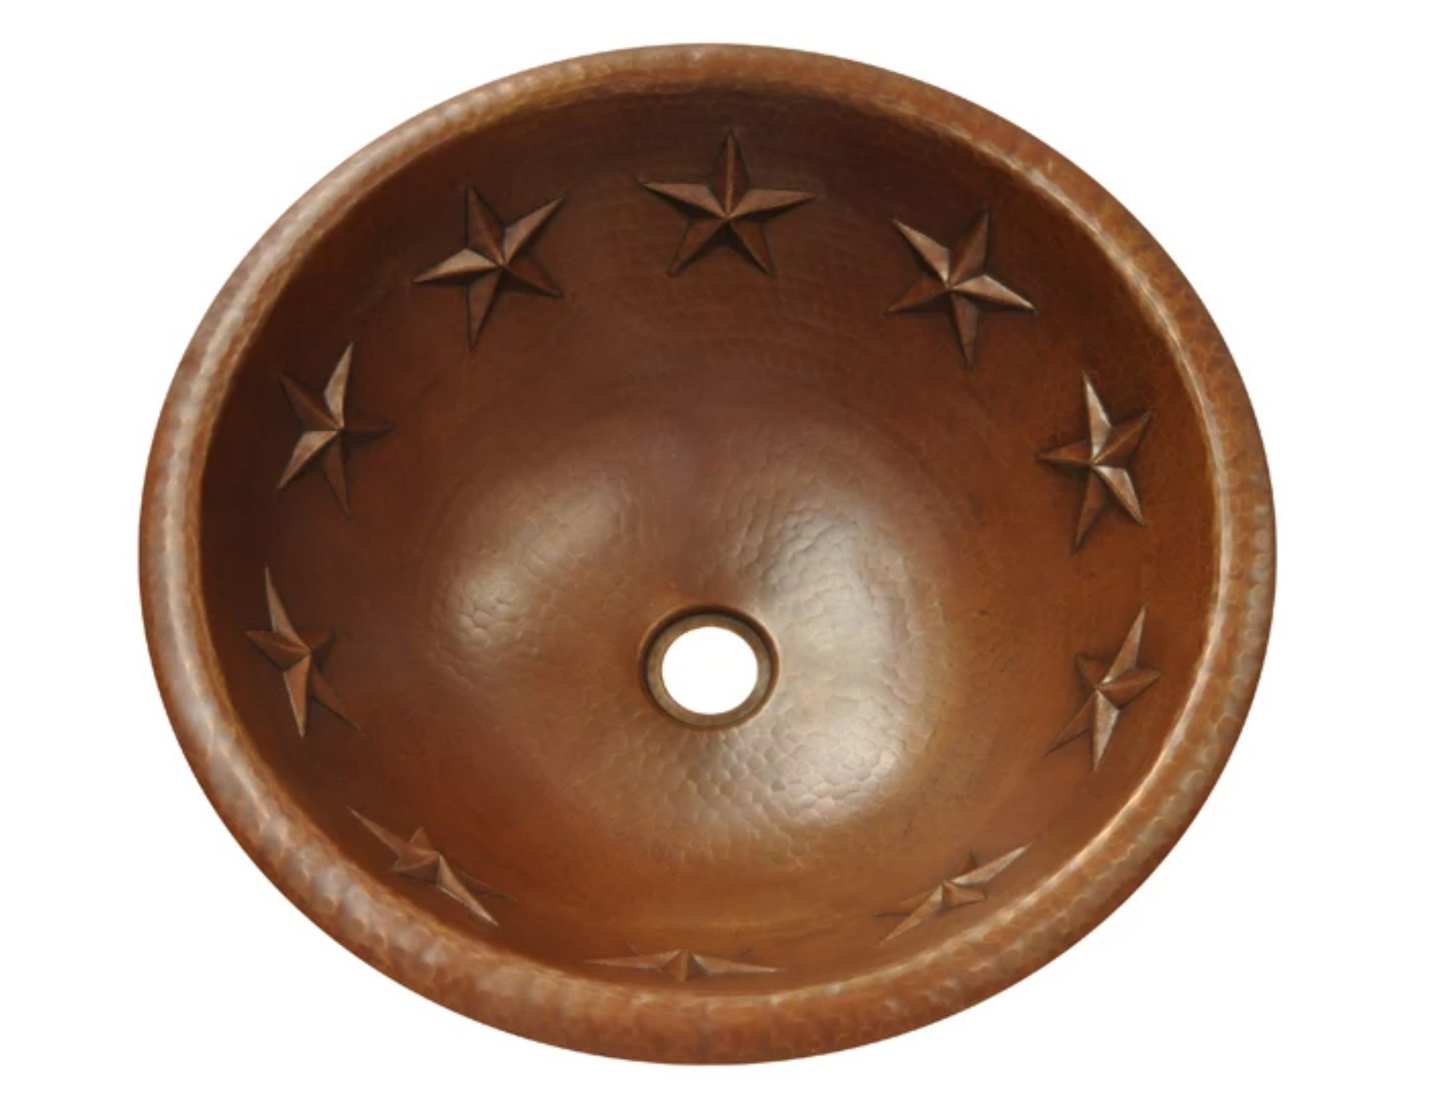 Round Hammered Copper Sink with Stars